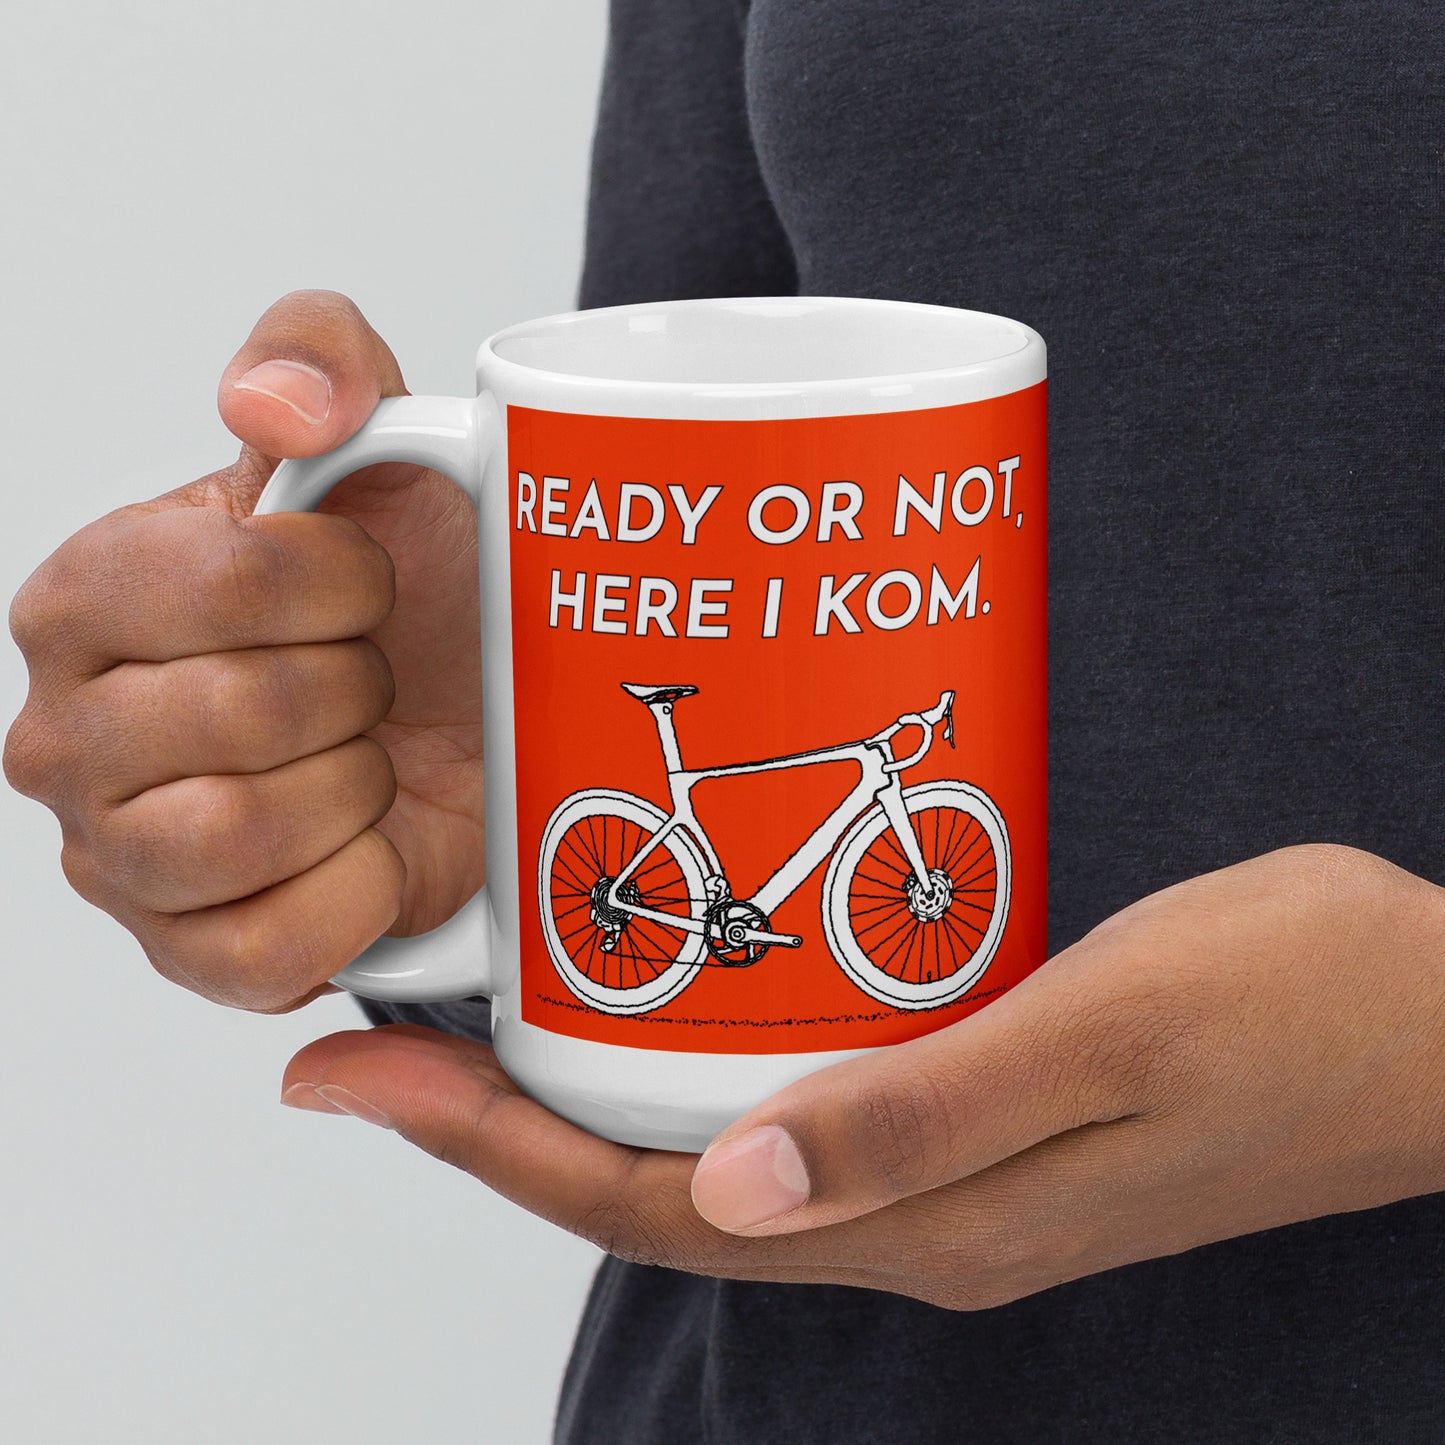 Ready Or Not, Here I KOM, Orange Bicycle Mug M076